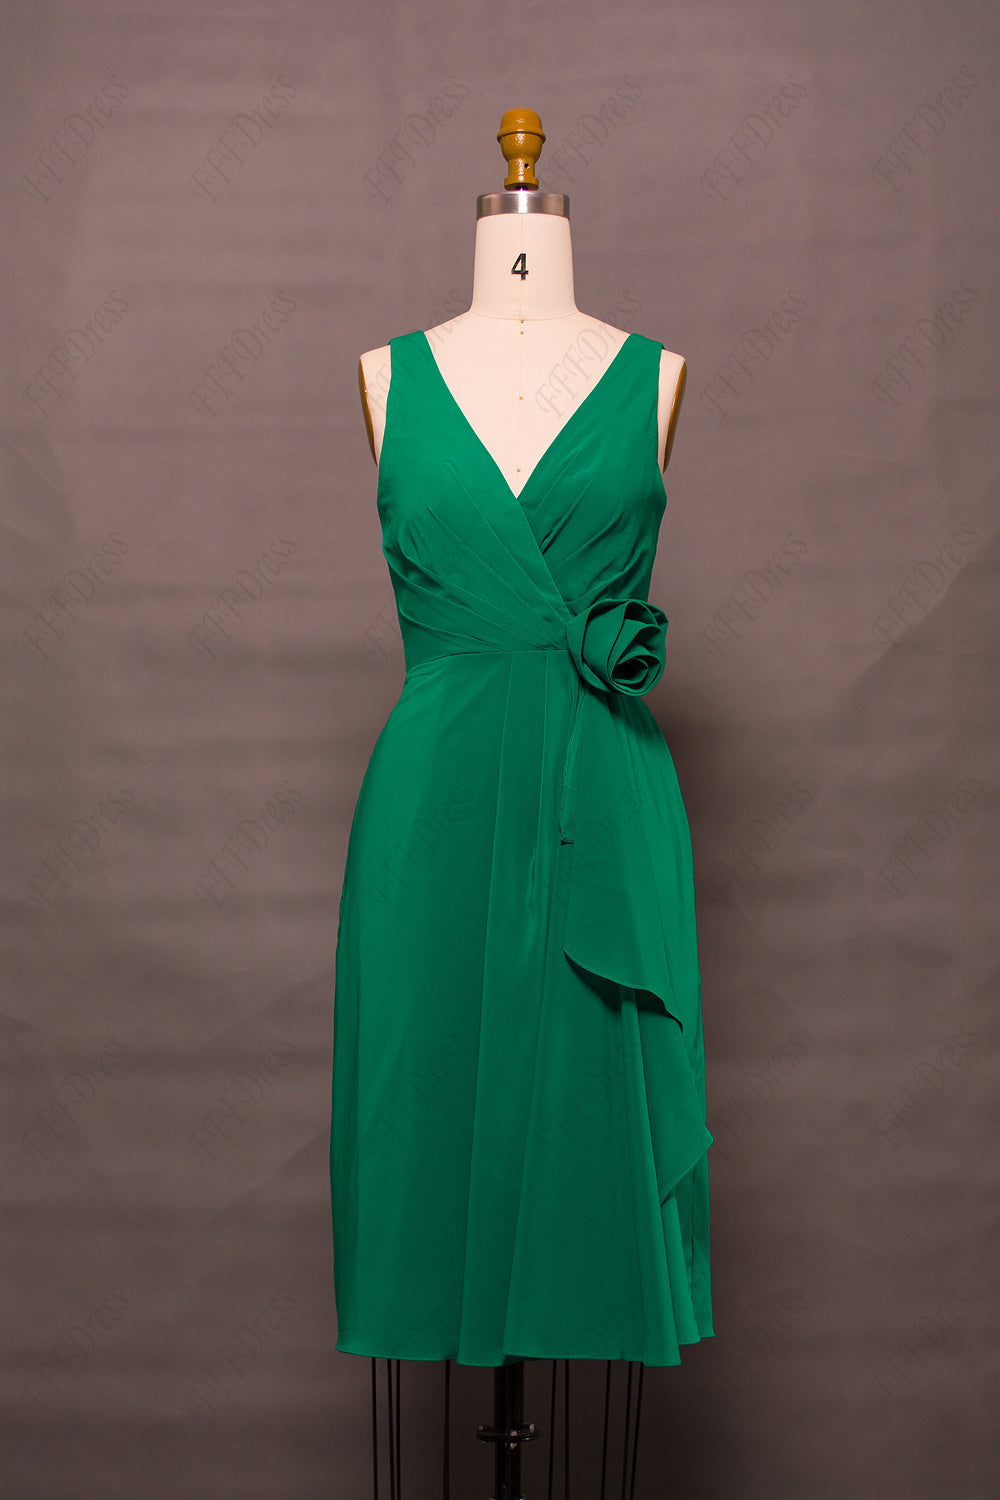 Emerald green short bridesmaid dress knee length